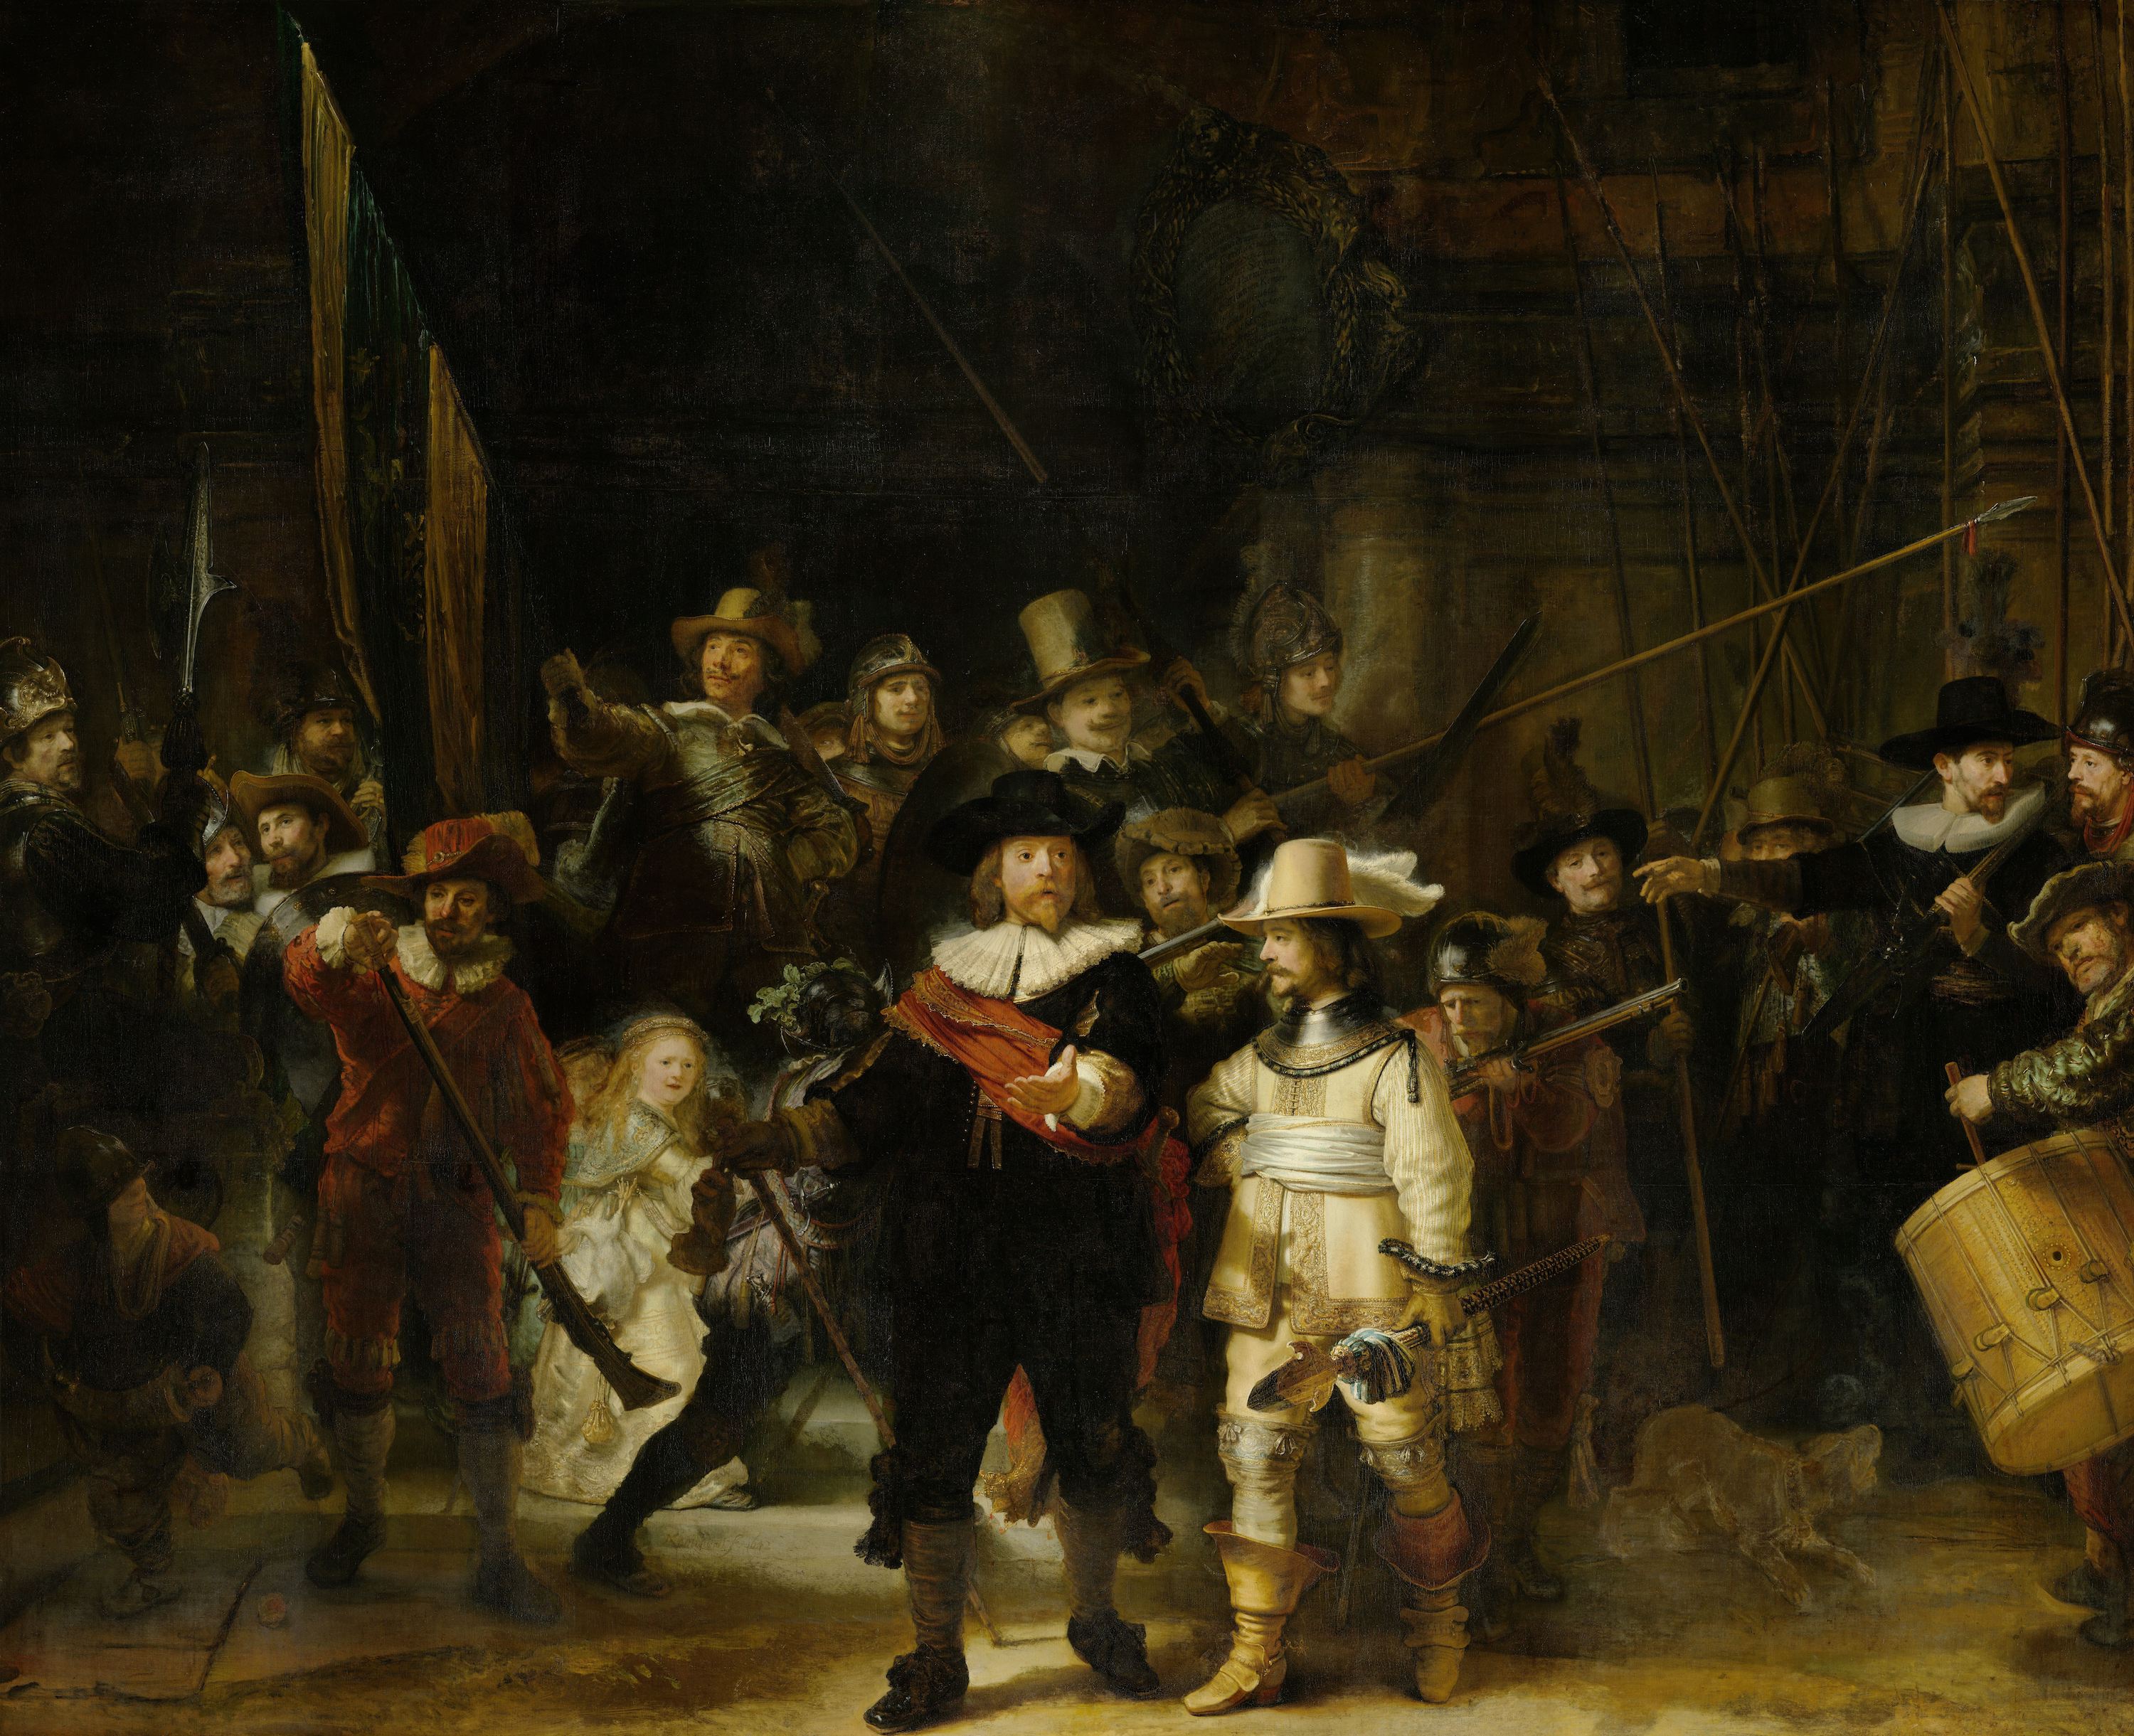 La Ronde de nuit by Rembrandt van Rijn - 1642 - 363 × 437 cm 